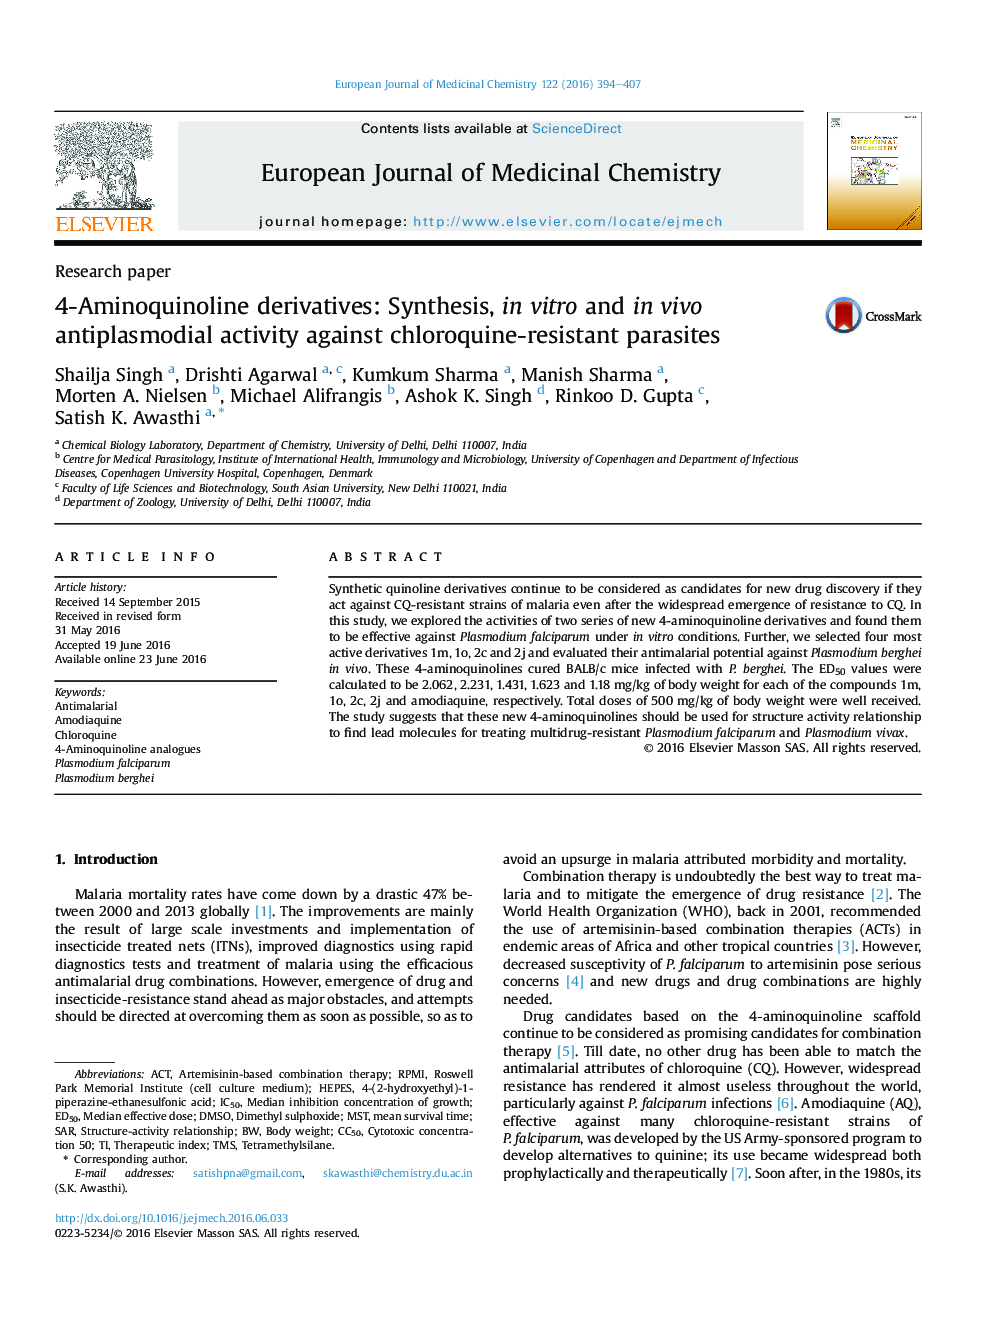 4-Aminoquinoline derivatives: Synthesis, in vitro and in vivo antiplasmodial activity against chloroquine-resistant parasites